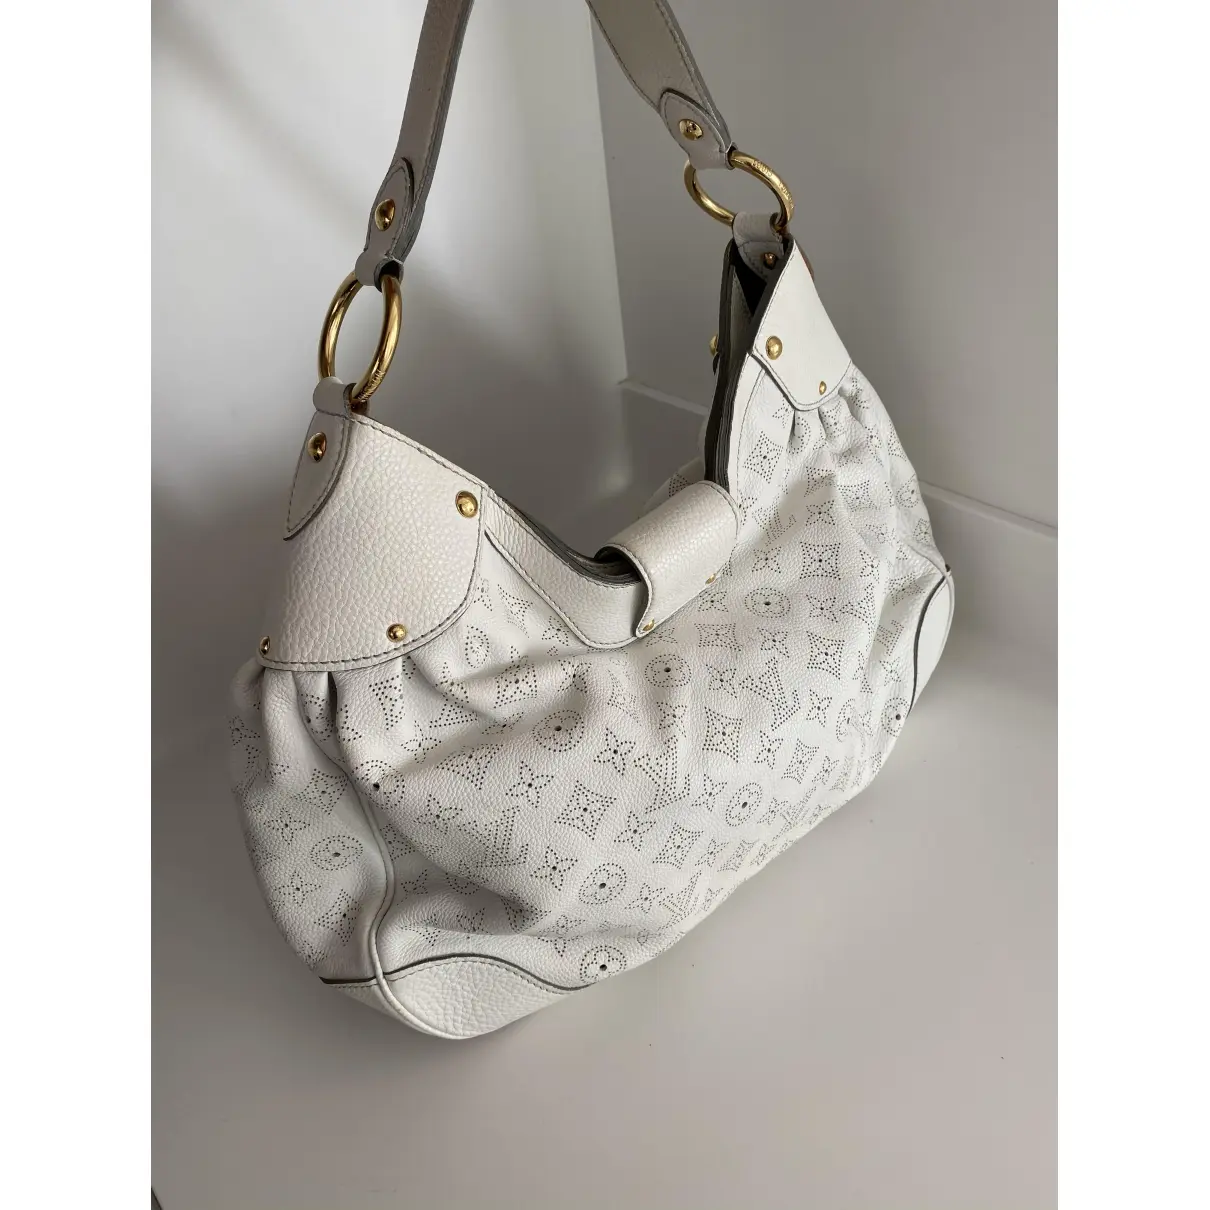 Buy Louis Vuitton Mahina leather handbag online